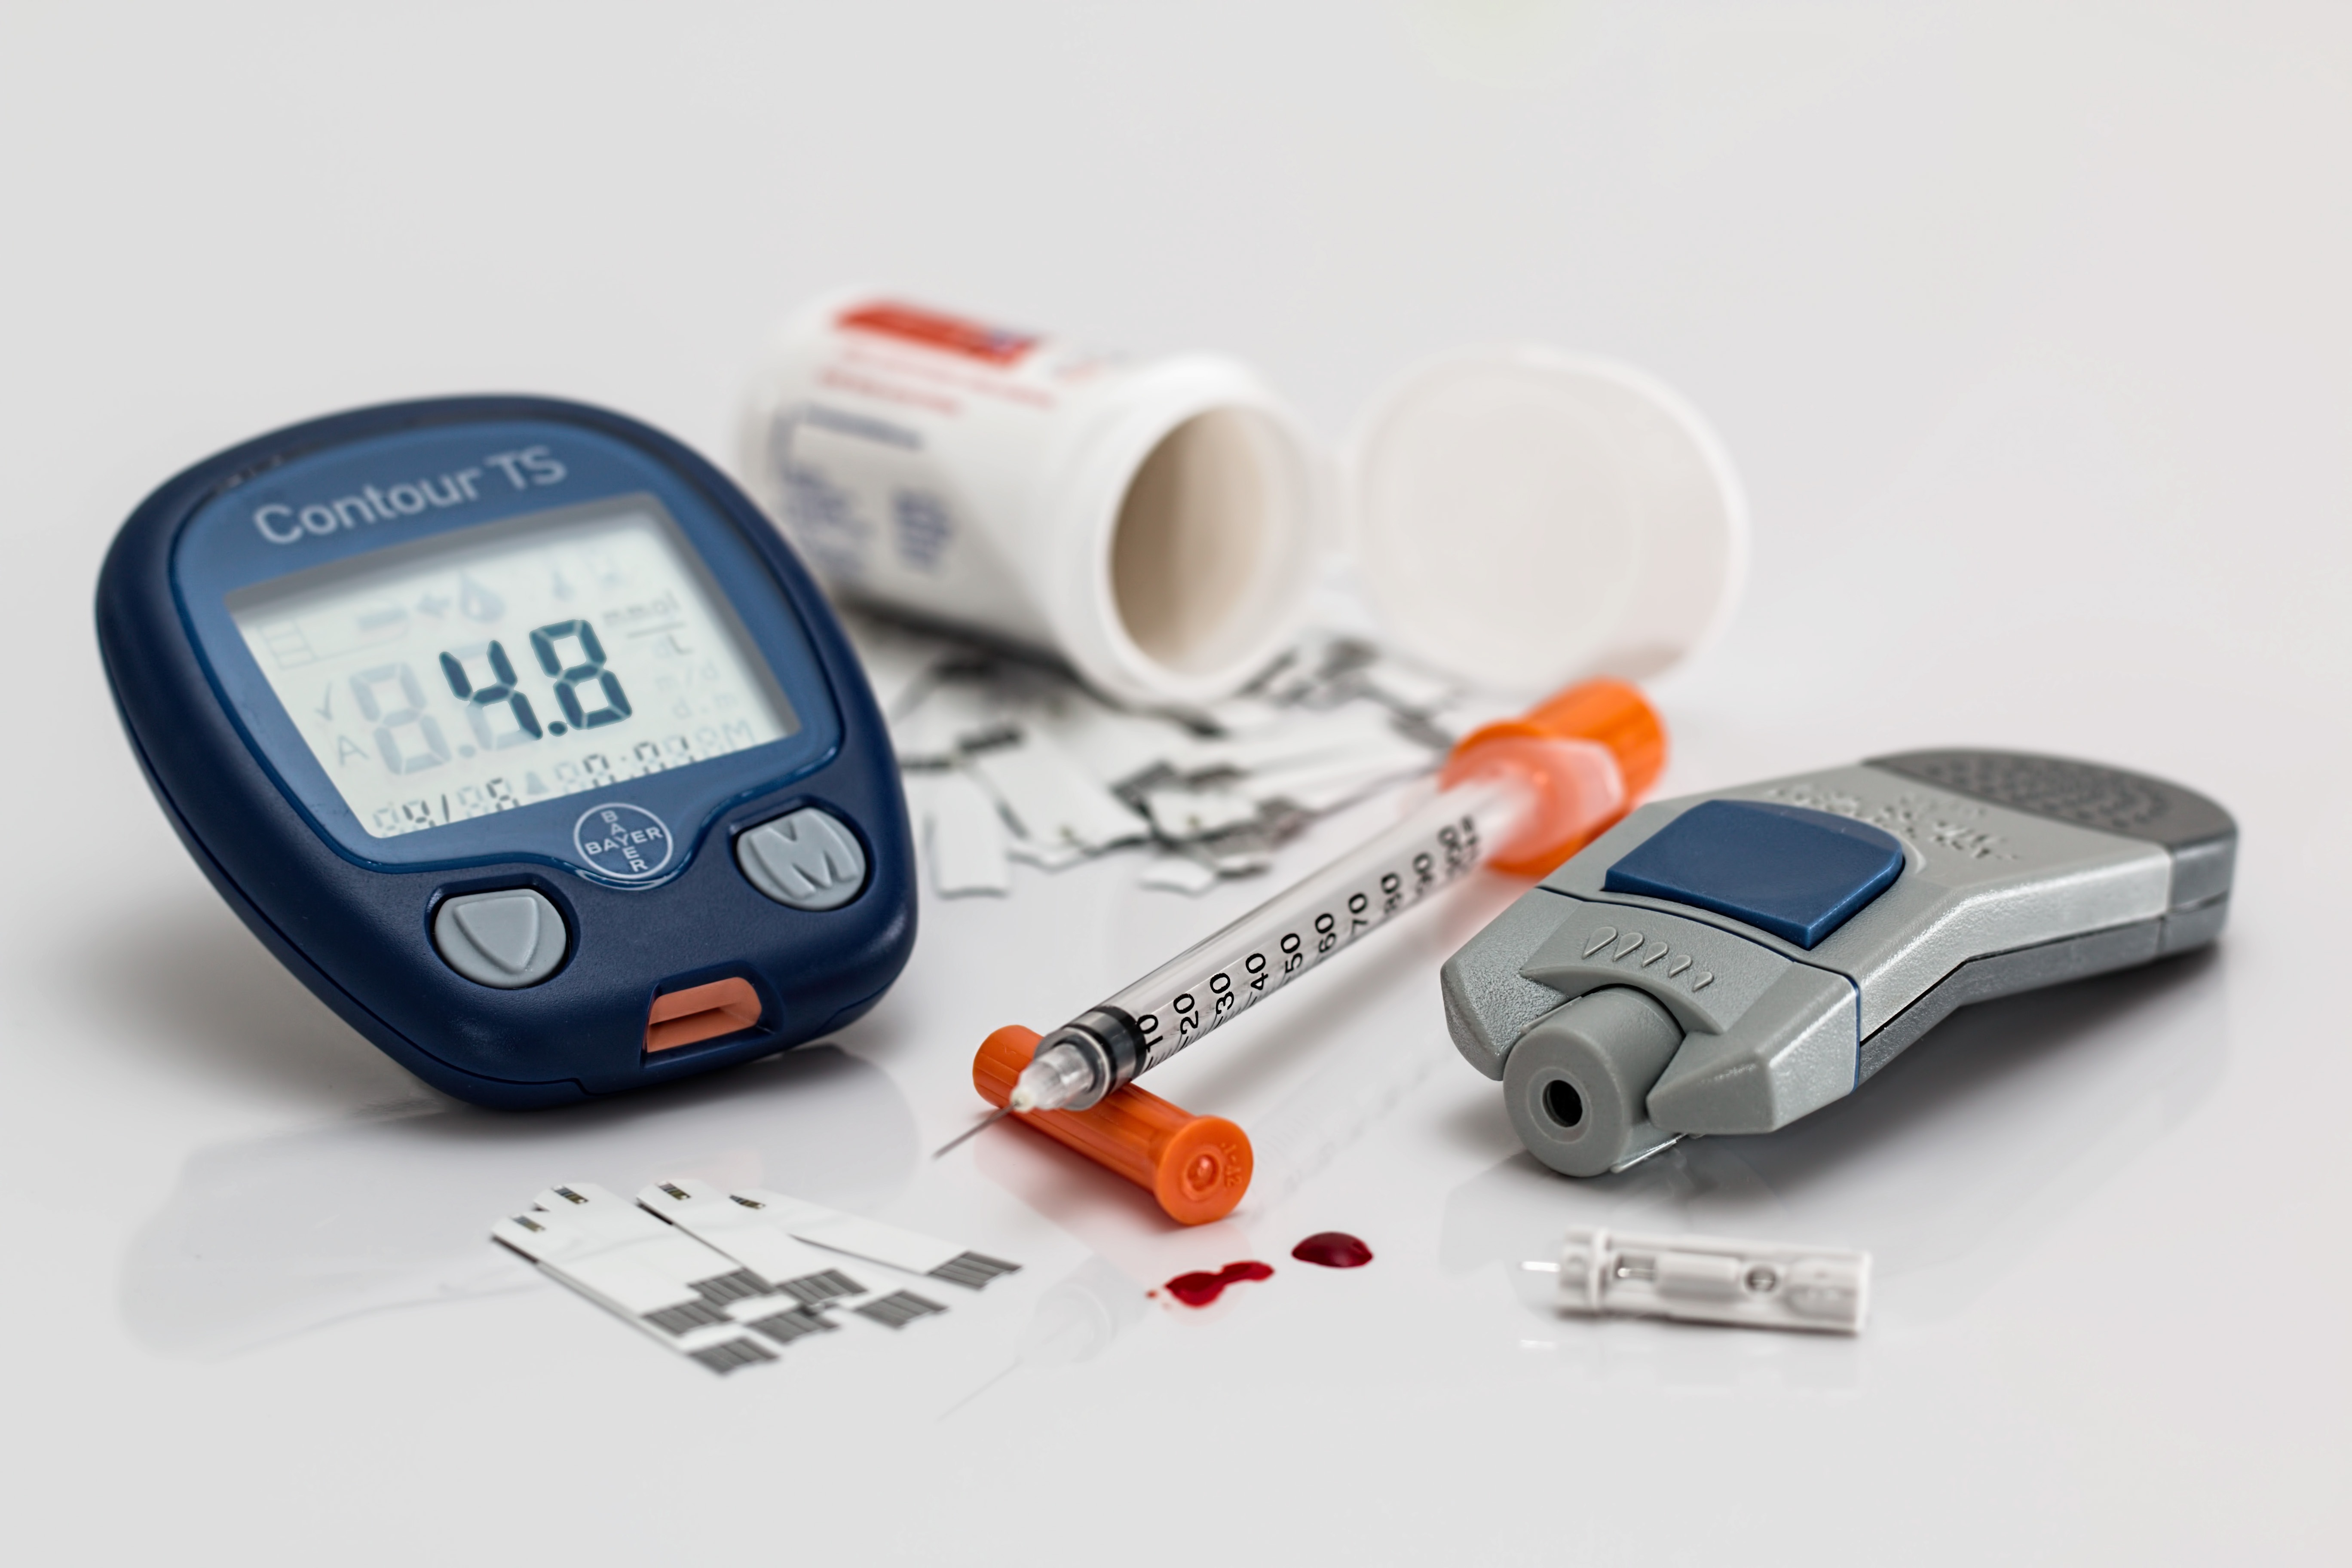 Blood sugar meter and supplies for managing diabetes.